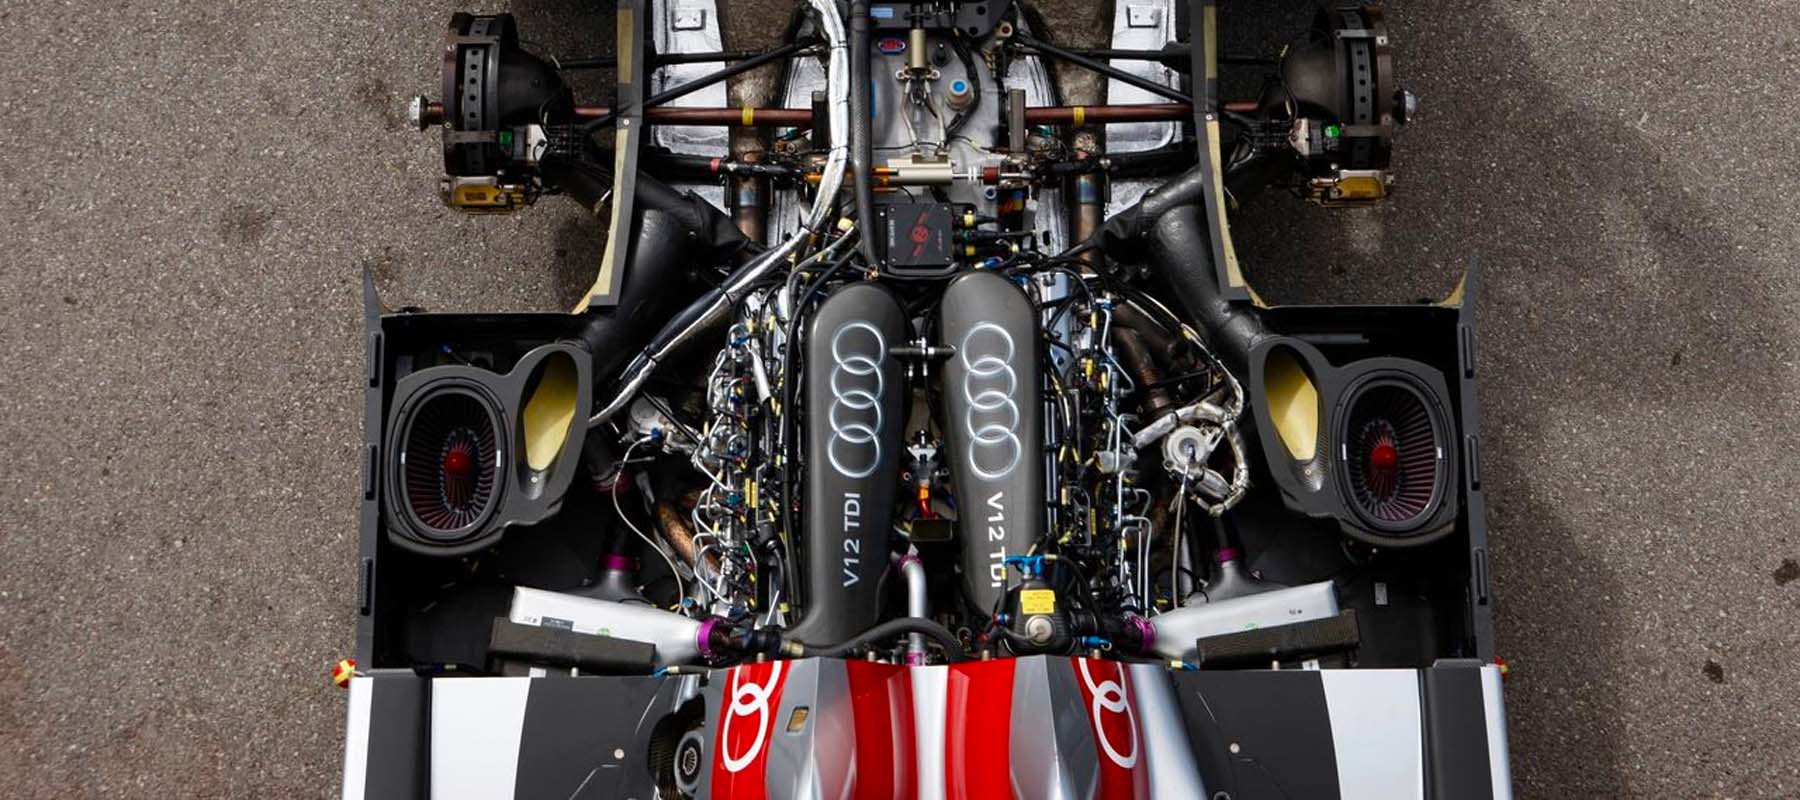 Race Engine of the Week - Audi V12 TDI